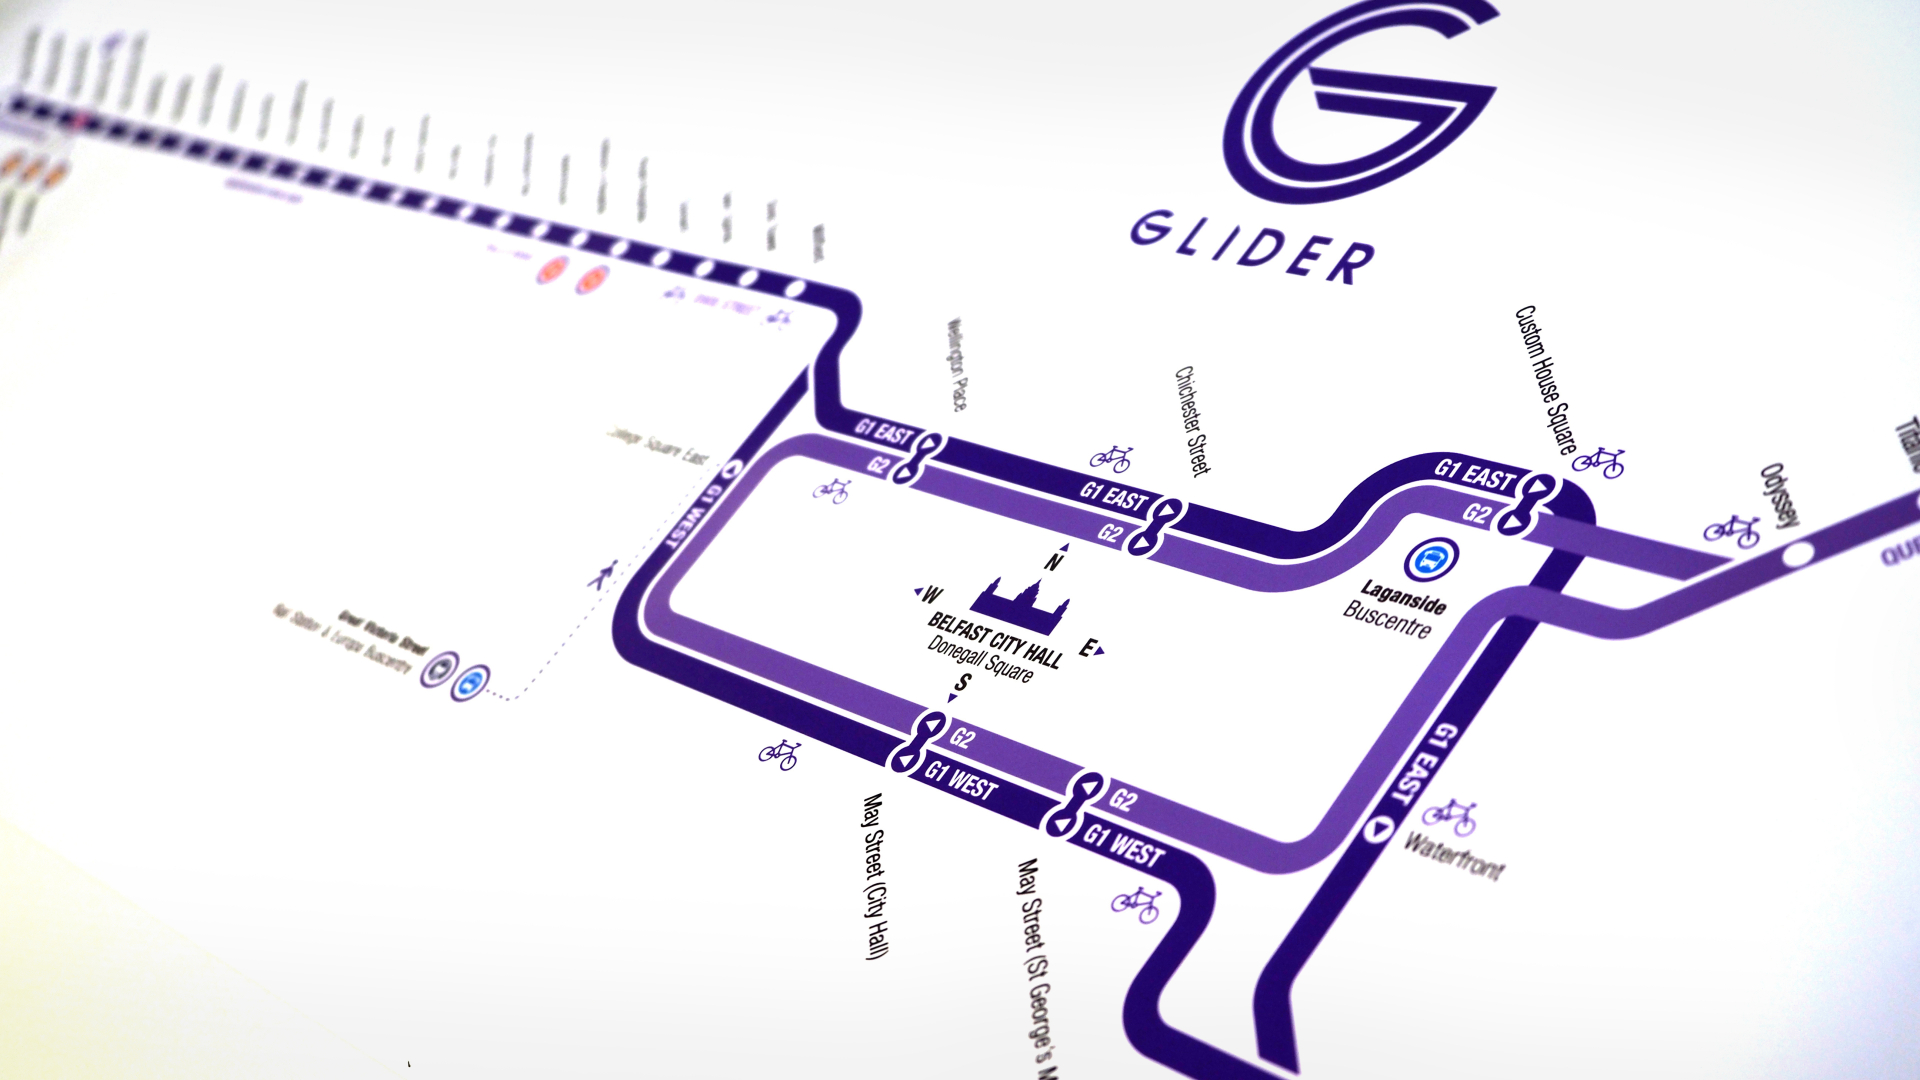 Translink Metro Glider Map detail